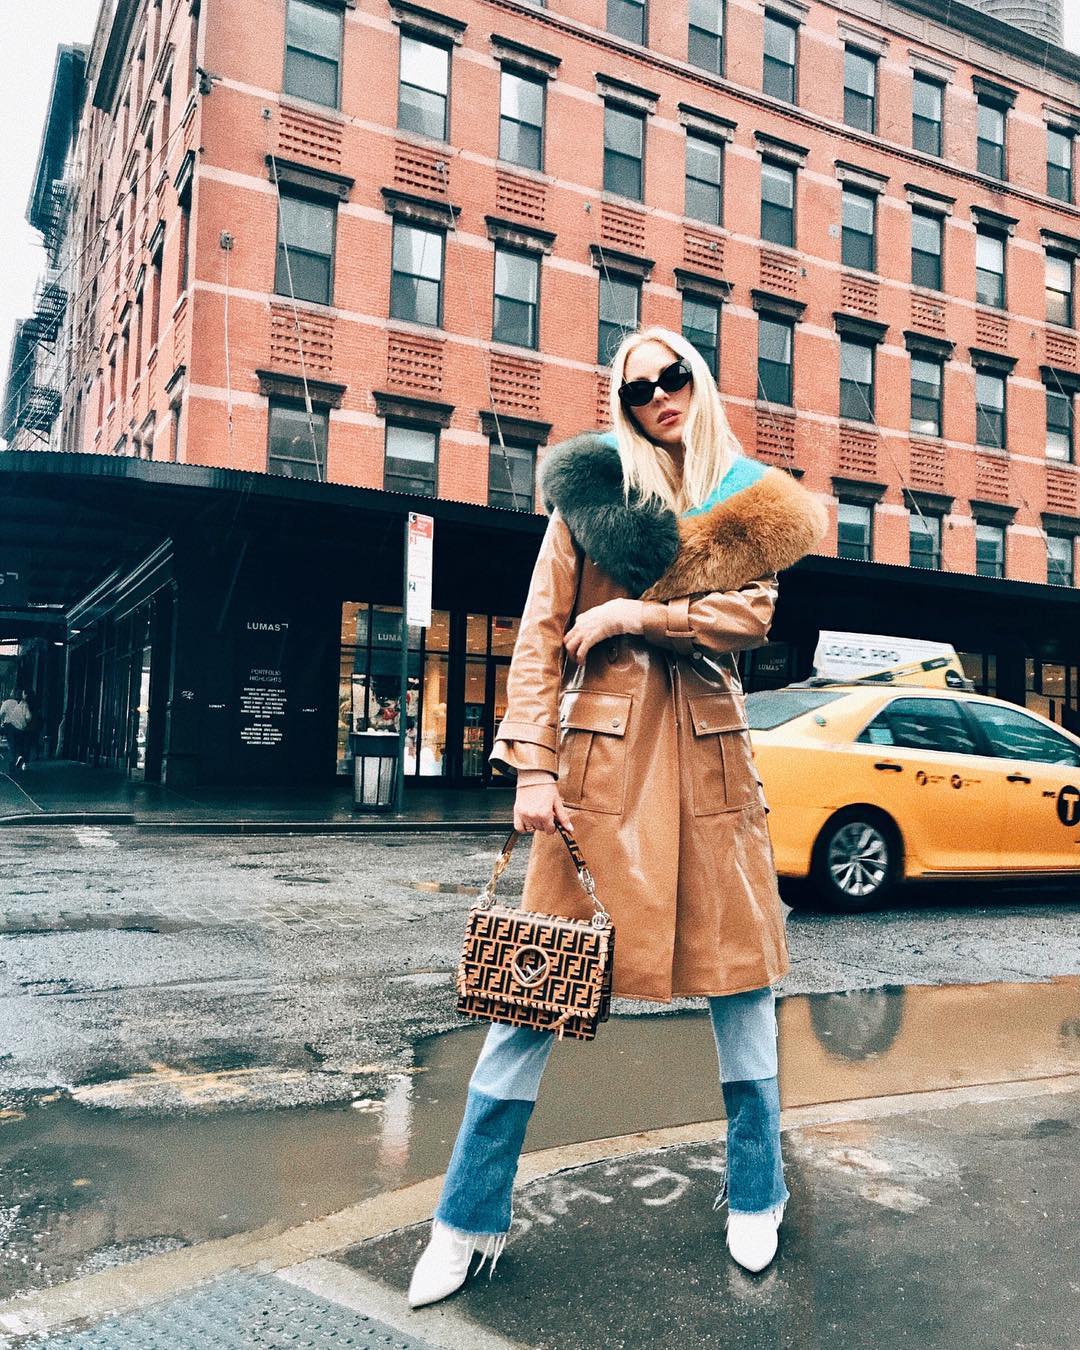 The Best Instagram Bag Looks From #NYFW's Street Style Stars - PurseBlog